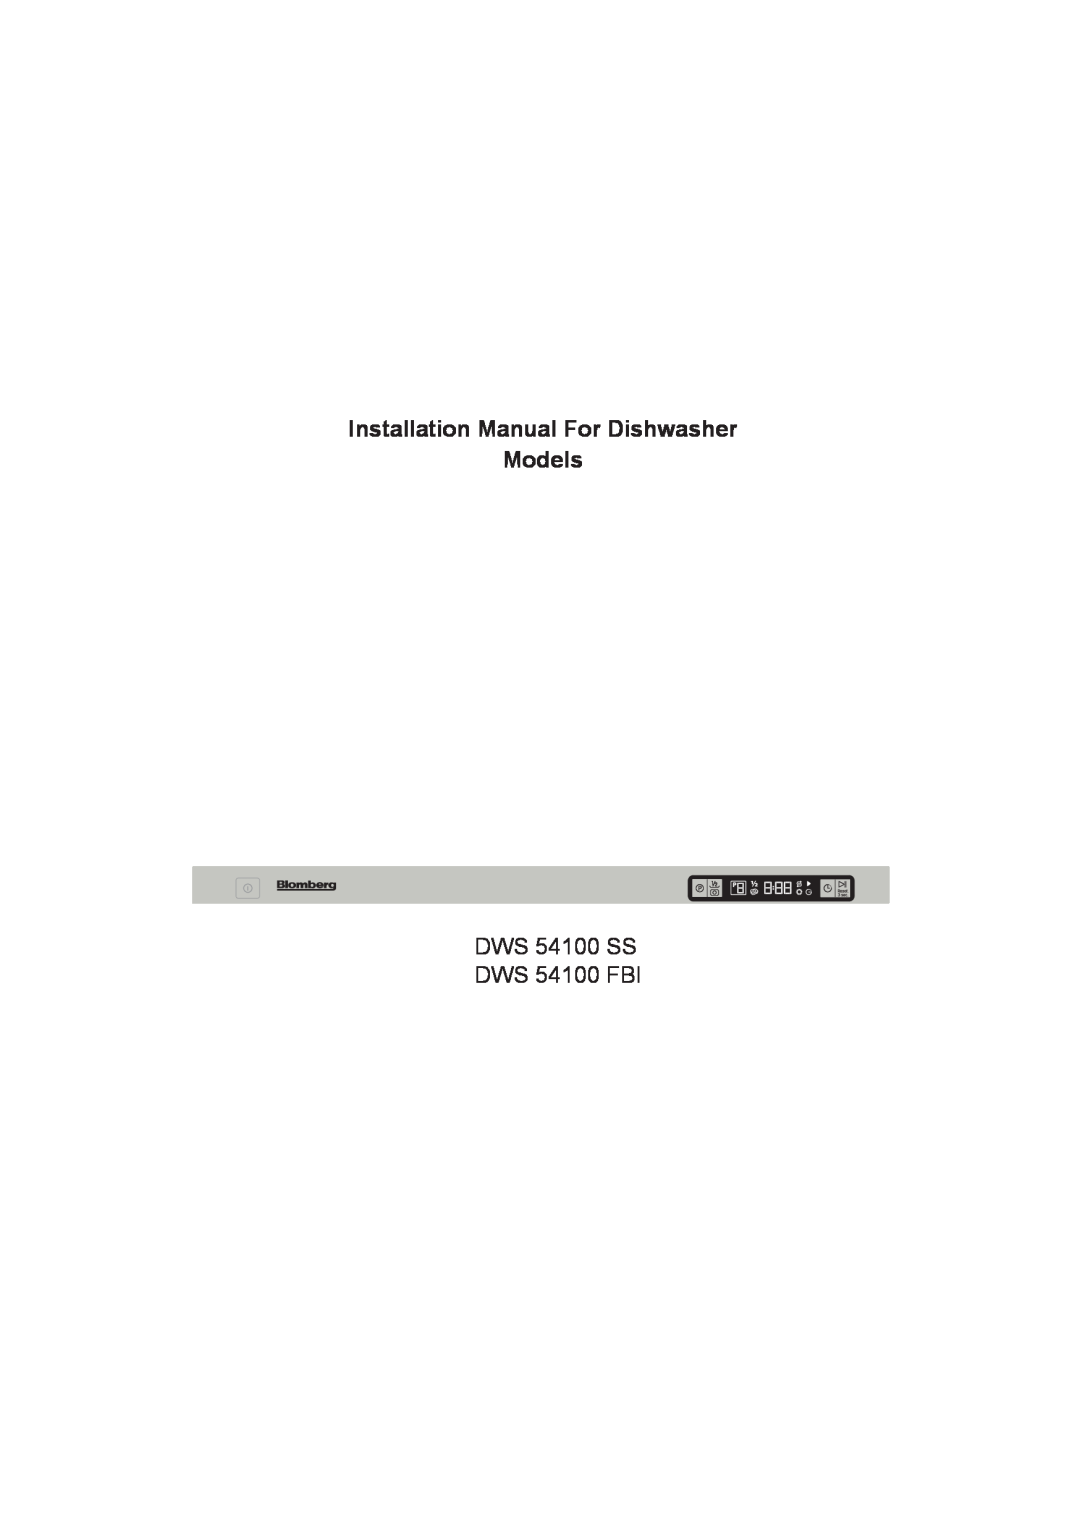 Blomberg installation manual Installation Manual For Dishwasher Models, DWS 54100 SS DWS 54100 FBI 